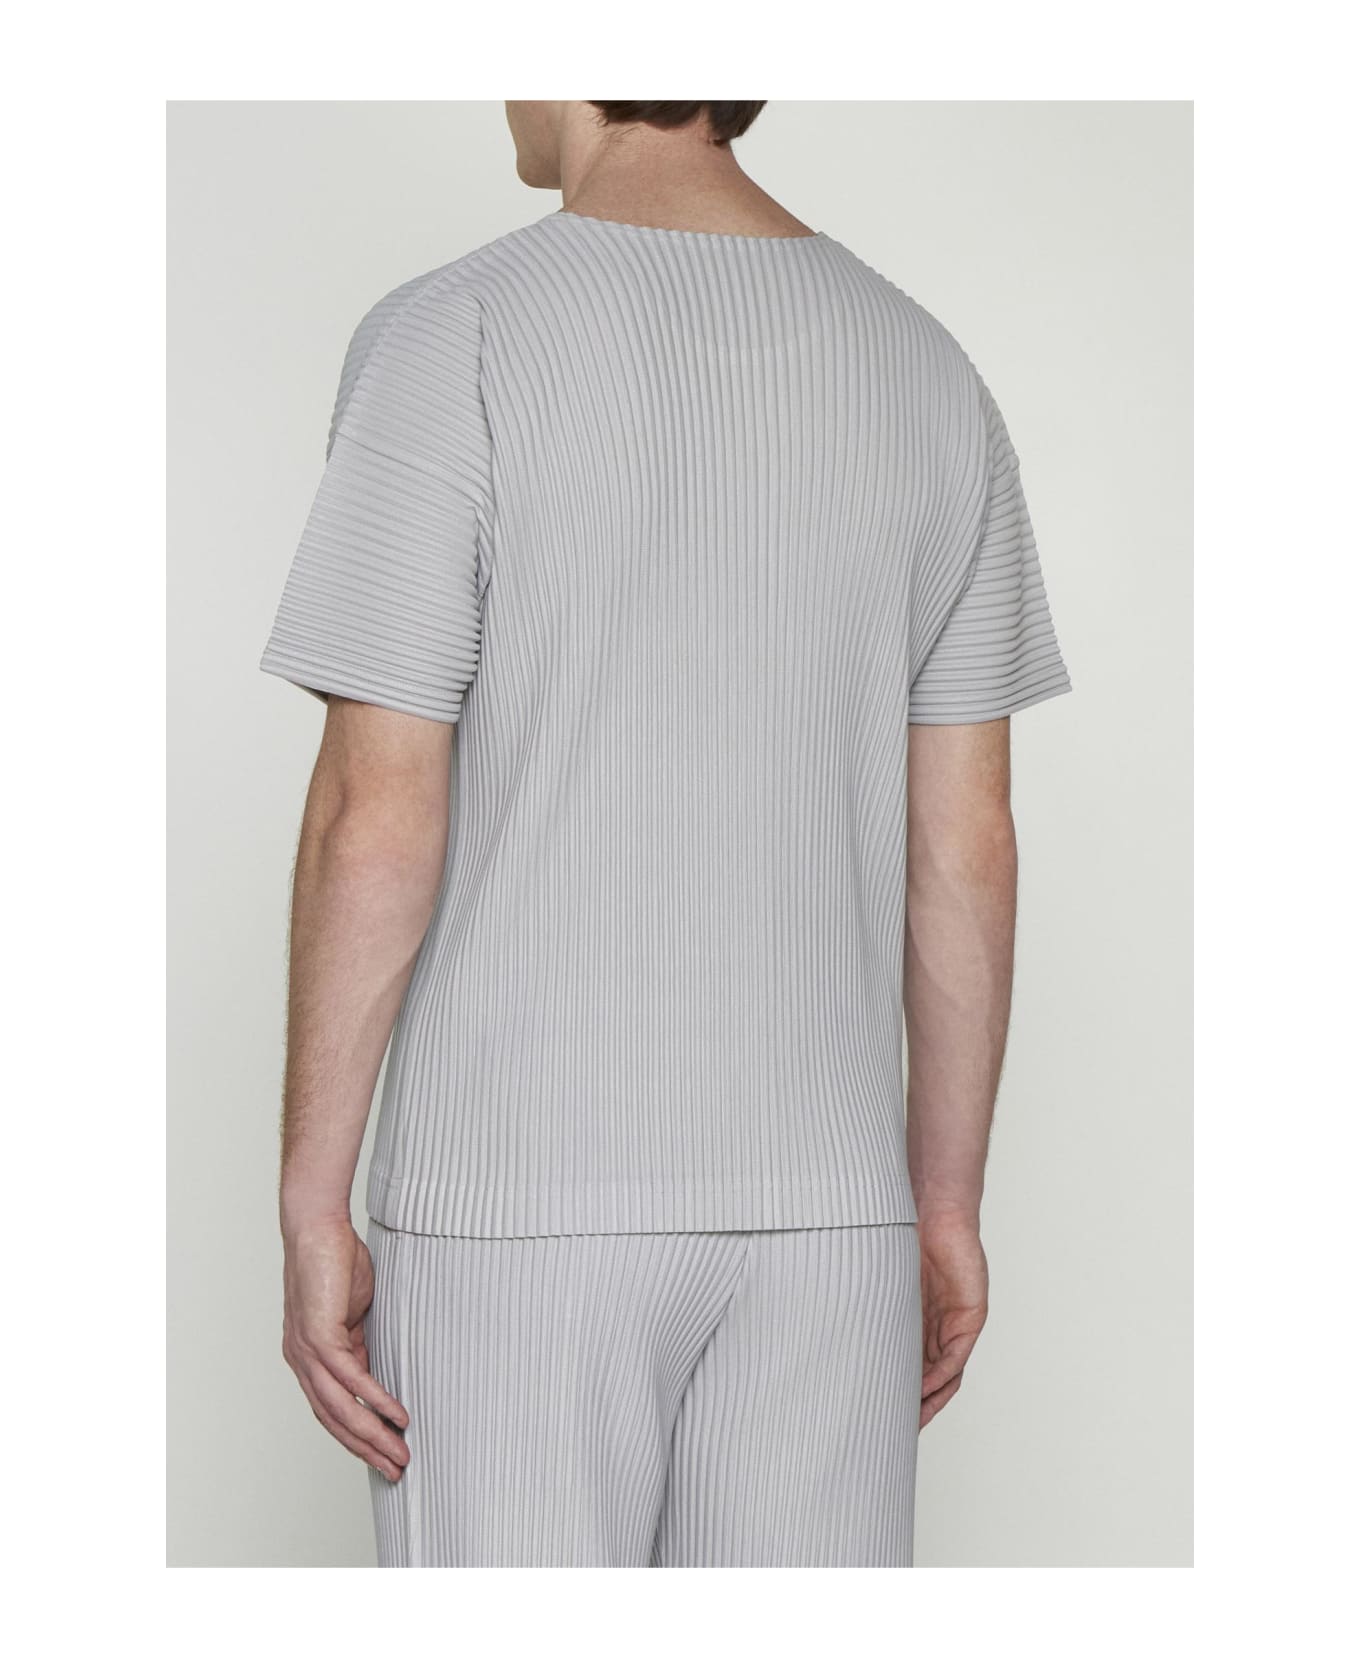 Homme Plissé Issey Miyake Pleated Fabric T-shirt - Light Grey シャツ